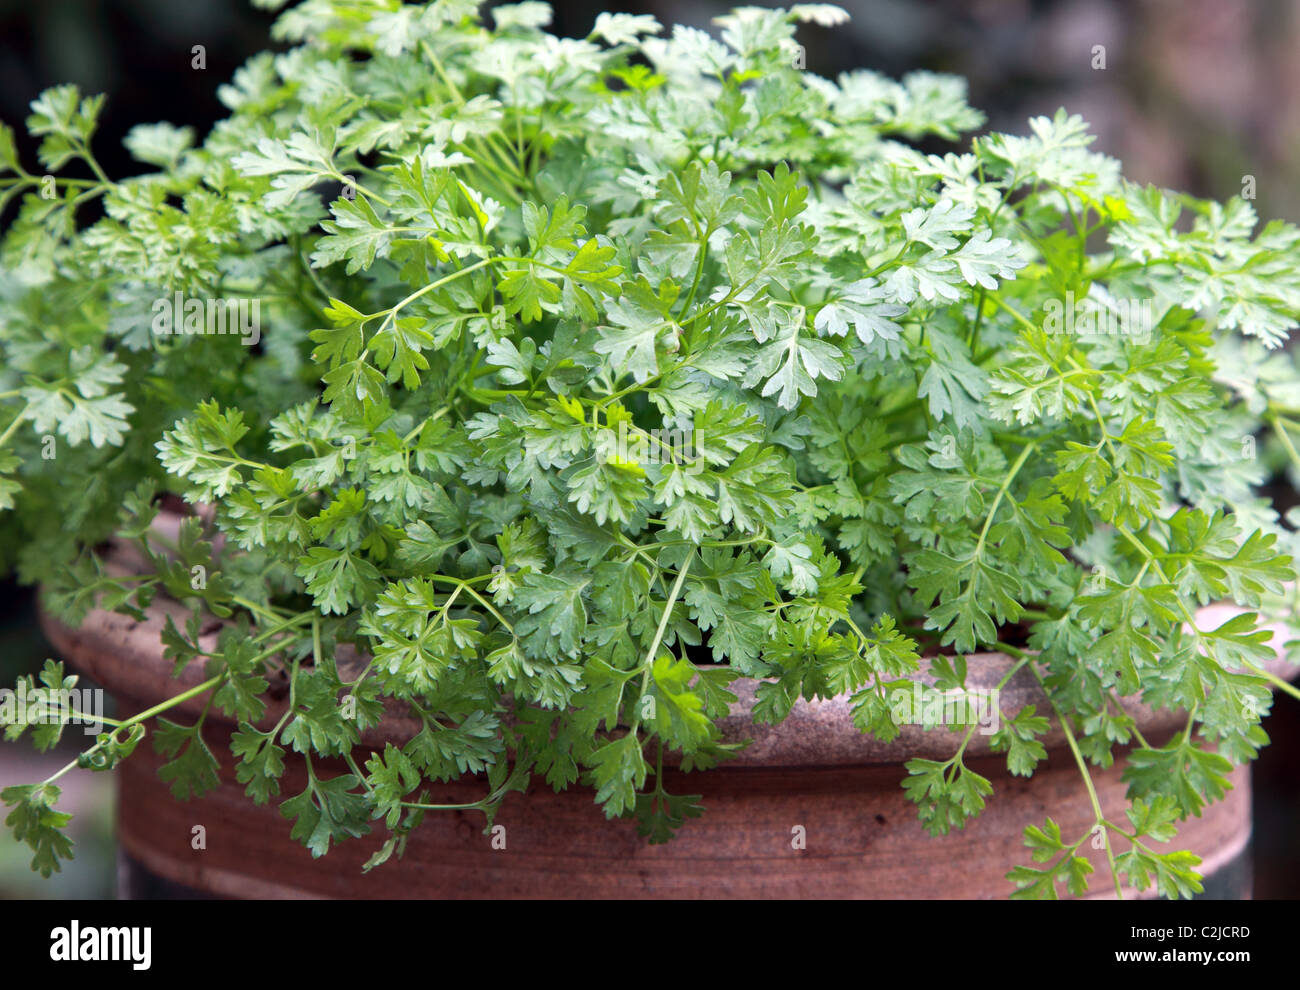 Chervil herb in an ornamental pot Stock Photo - Alamy